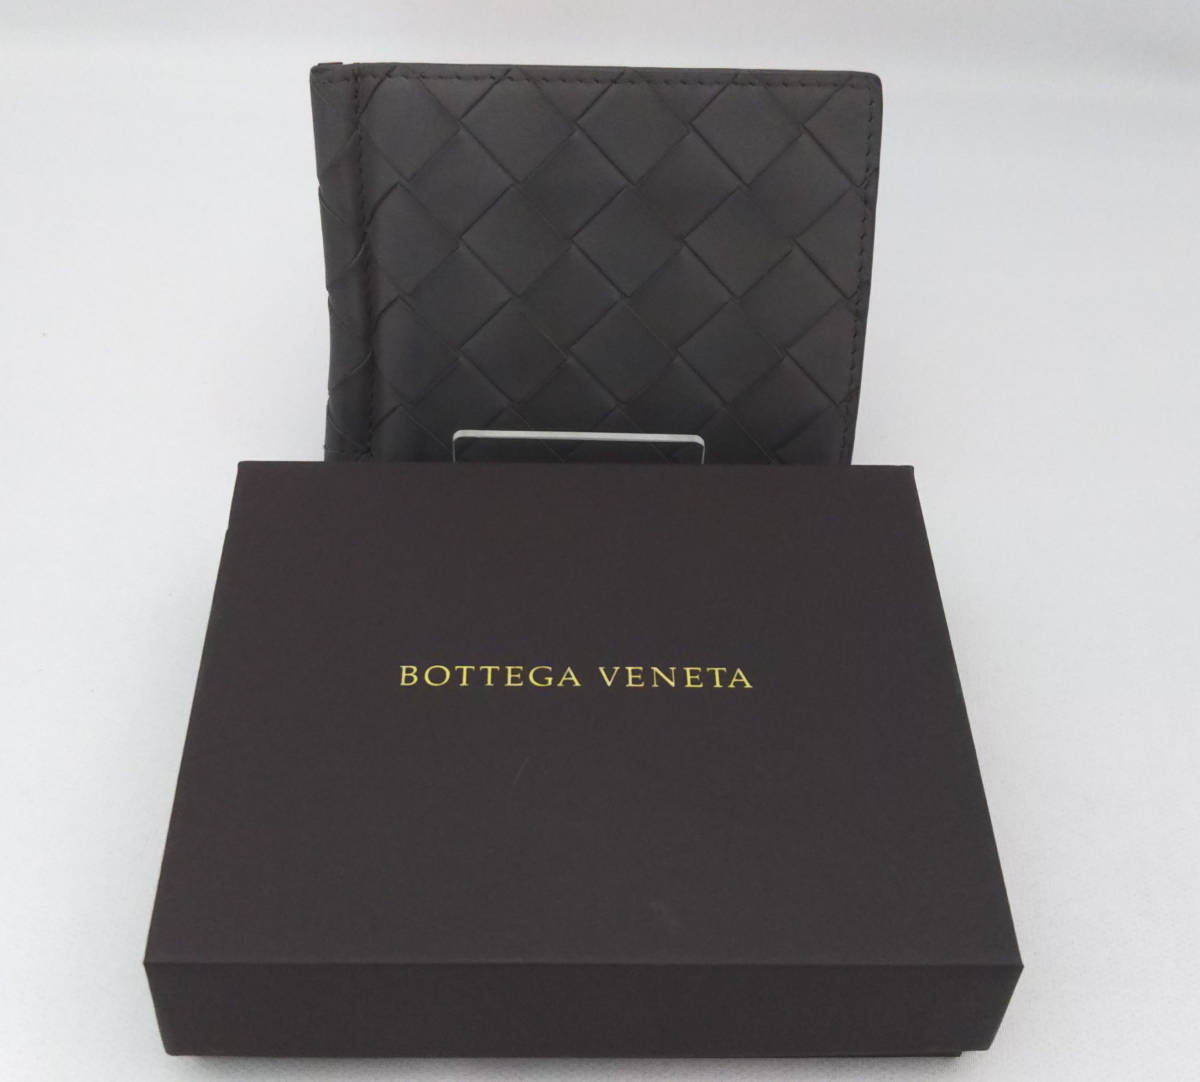 BOTTEGA VENETA イントレチャート P01367638N マネークリップ ダークグレー 財布 二つ折り ボッテガ・ヴェネタ _画像8